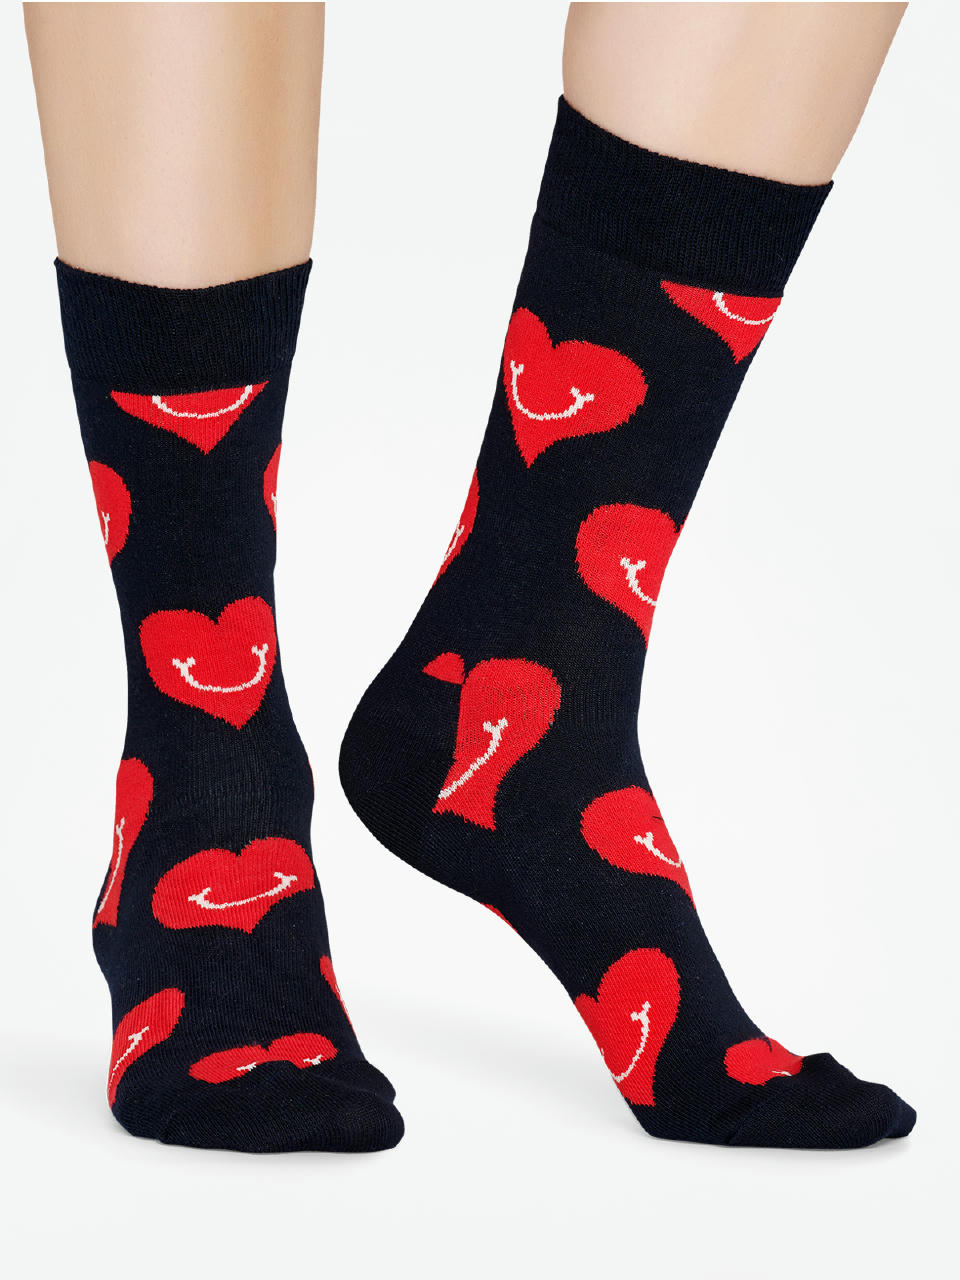 Happy Socks Smiley Heart Socken (black/red)